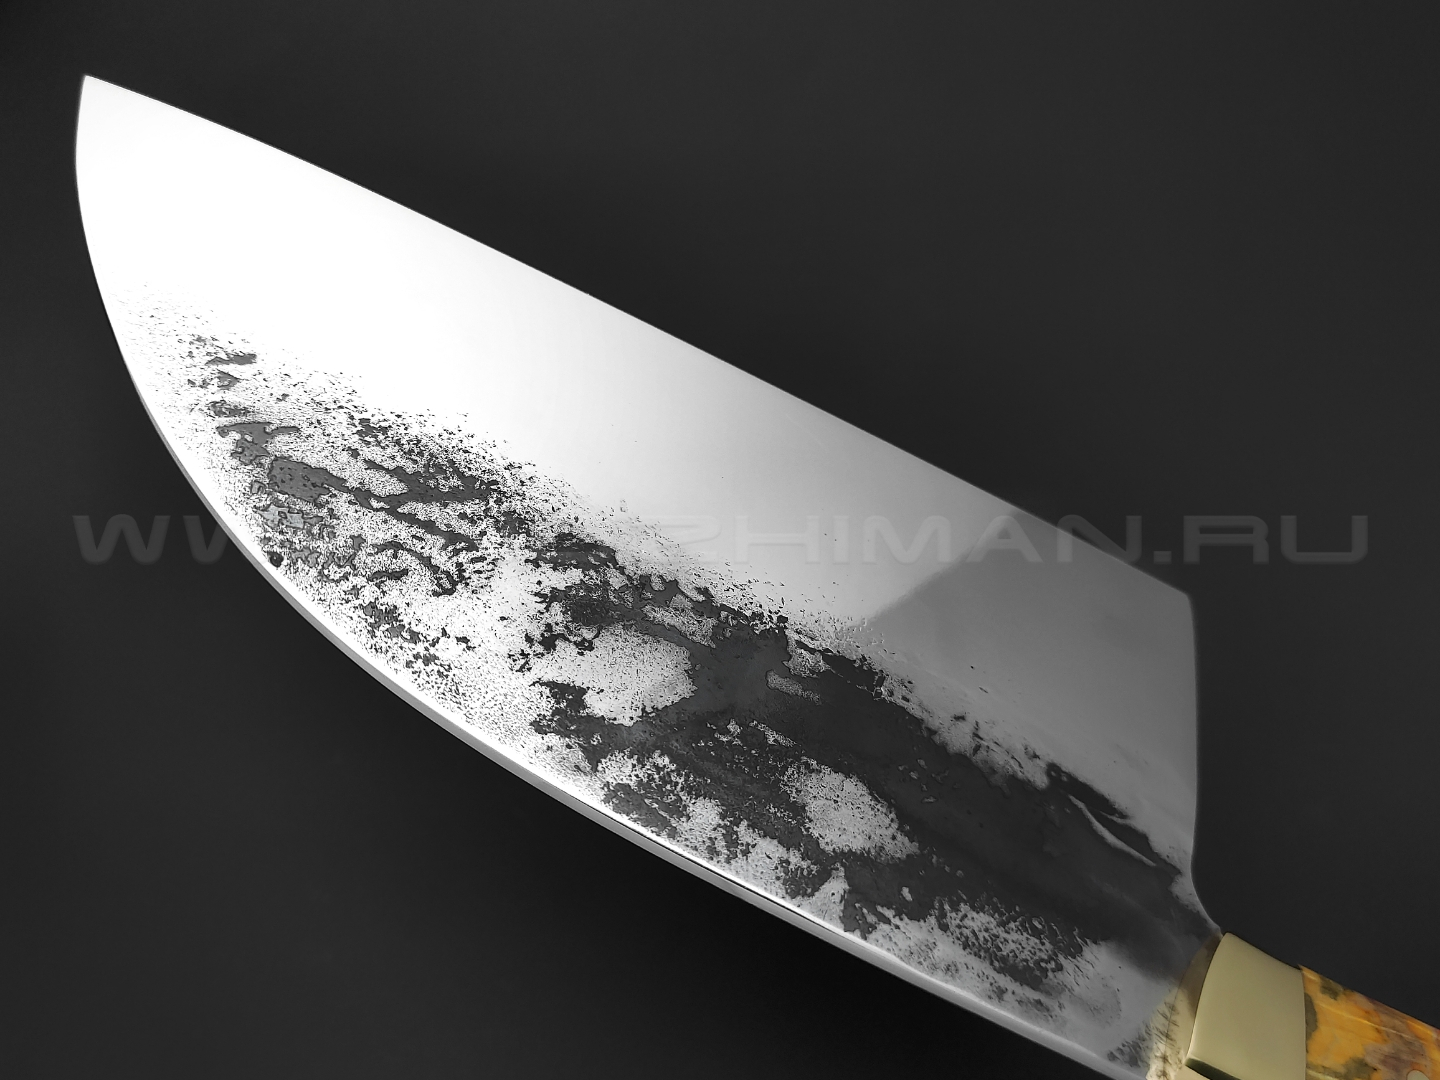 Нож "Сербский Шеф" сталь K340, рукоять дерево кап манго (Товарищество Завьялова)